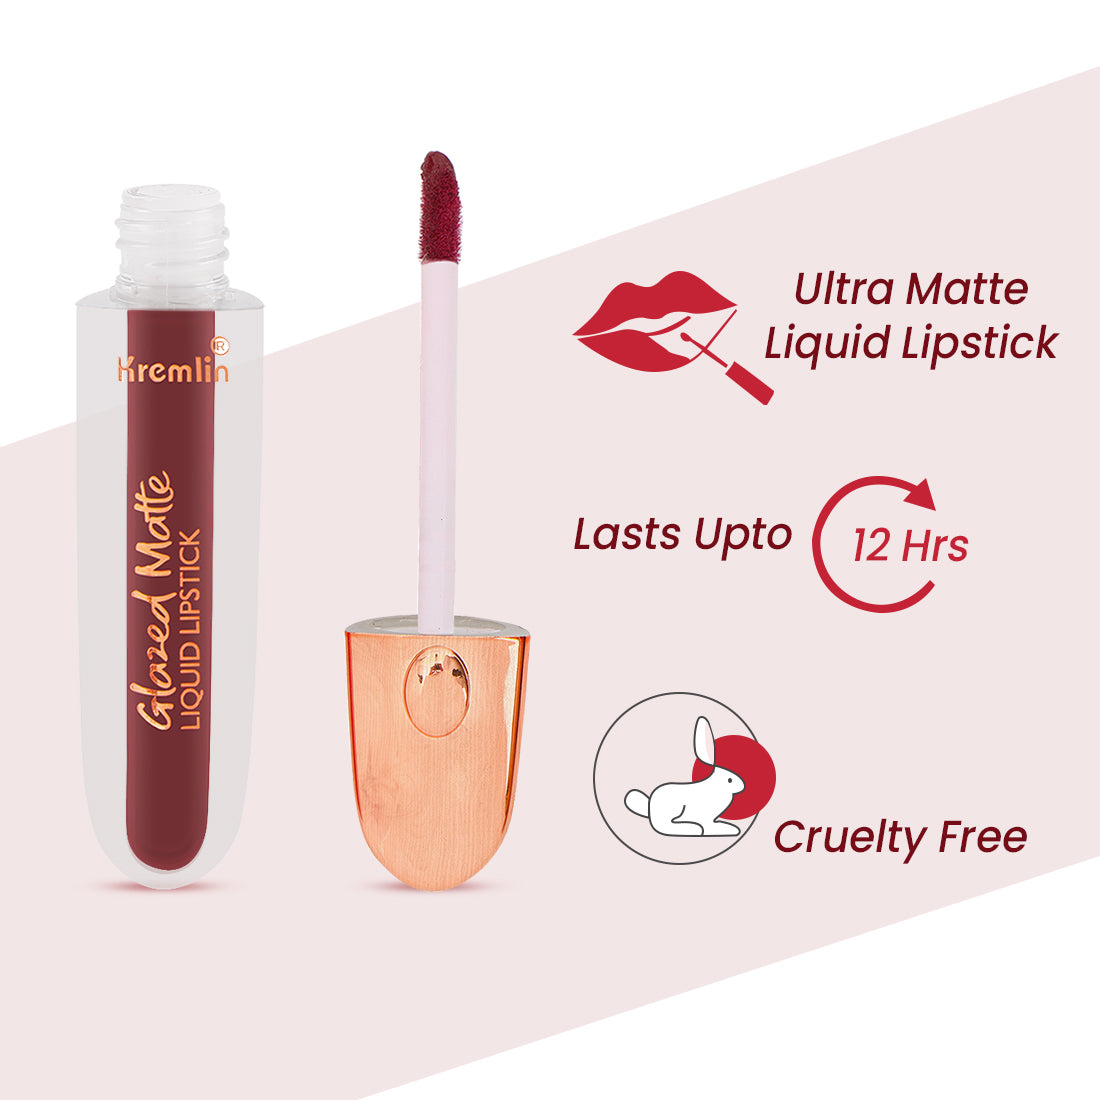 Kremlin Glazed Matte Liquid Lipstick Lips Pack of 2 (Sizzling Slayer,Wicked)